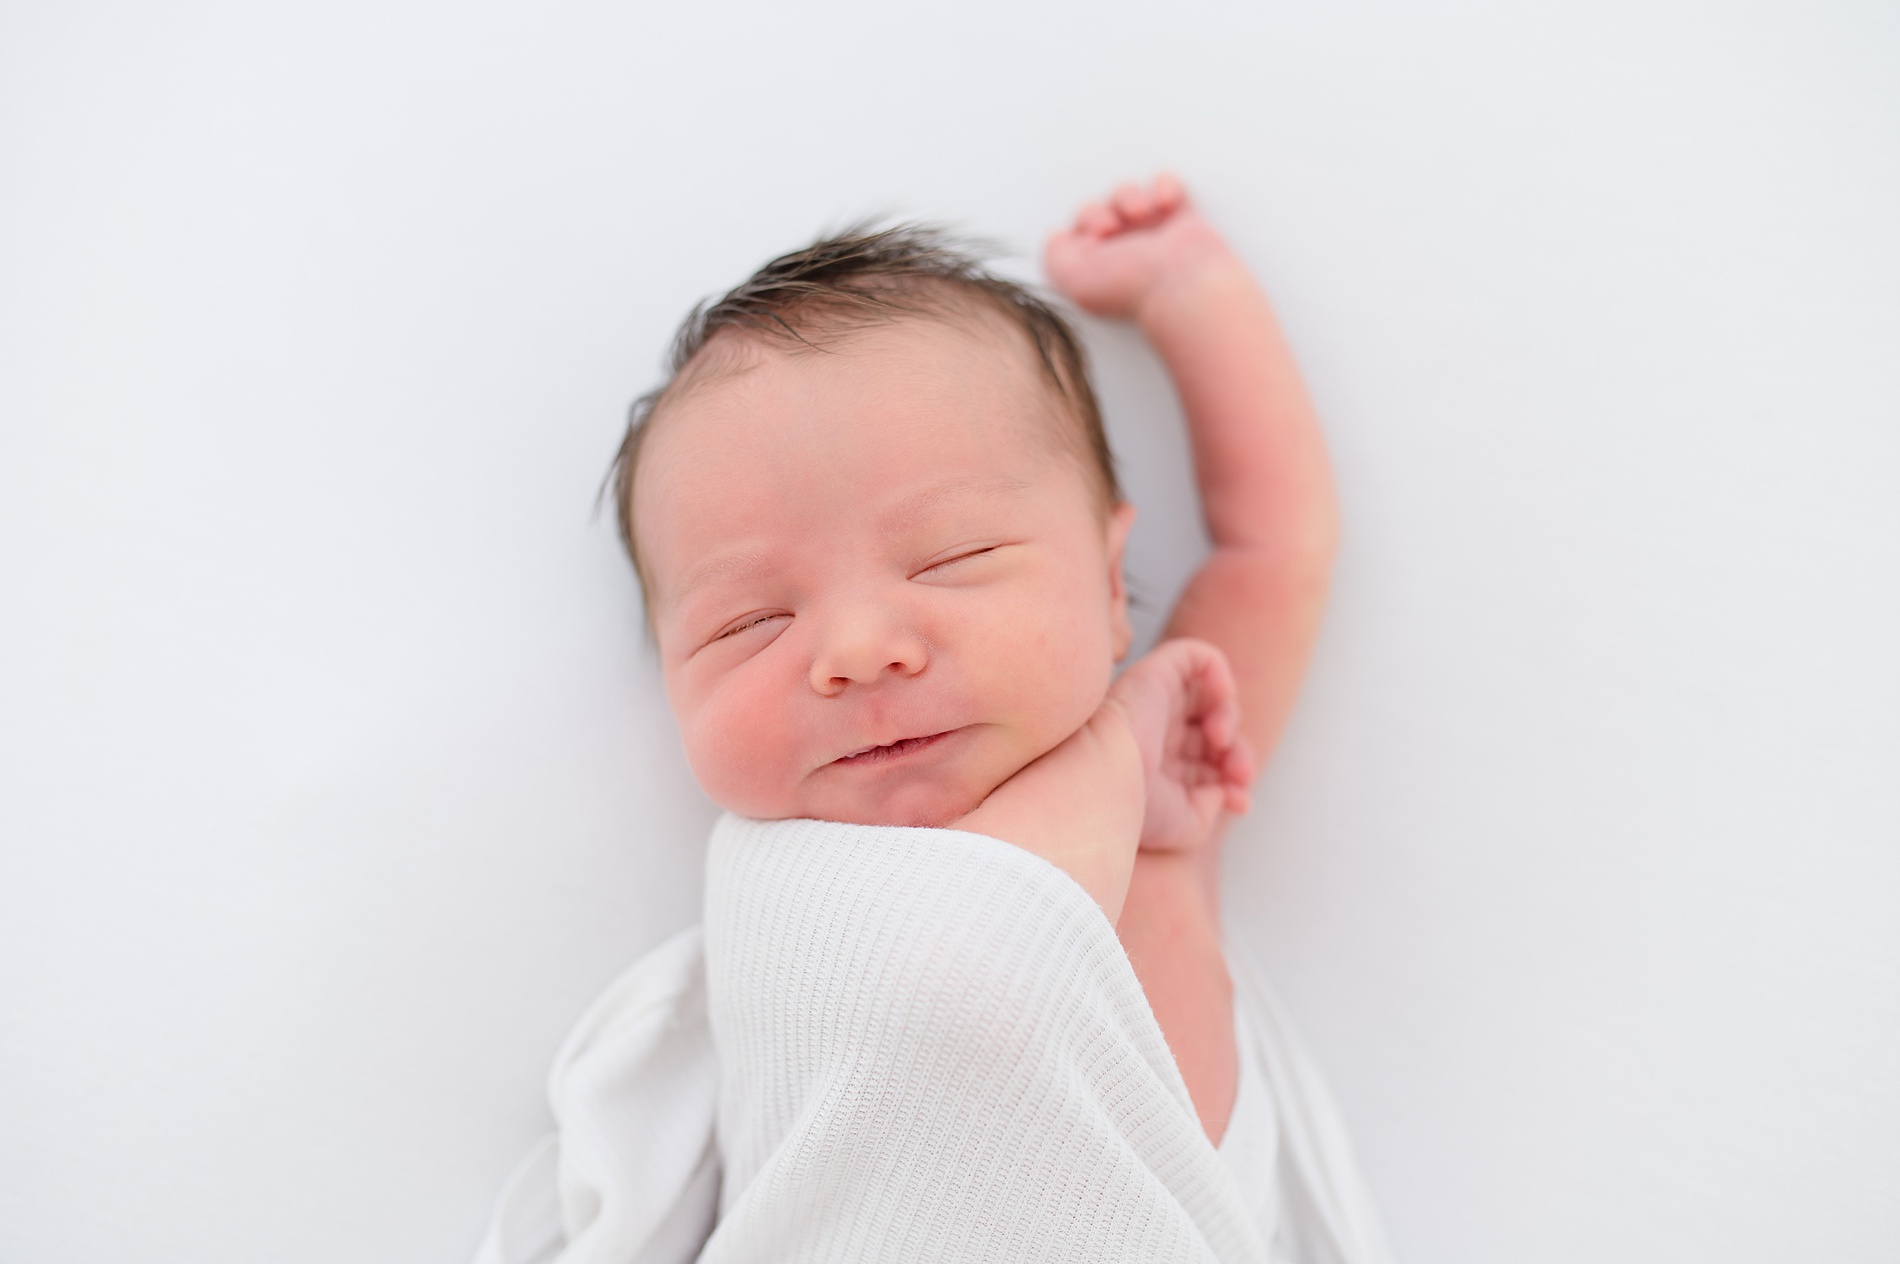 newborn gives sleepy smile